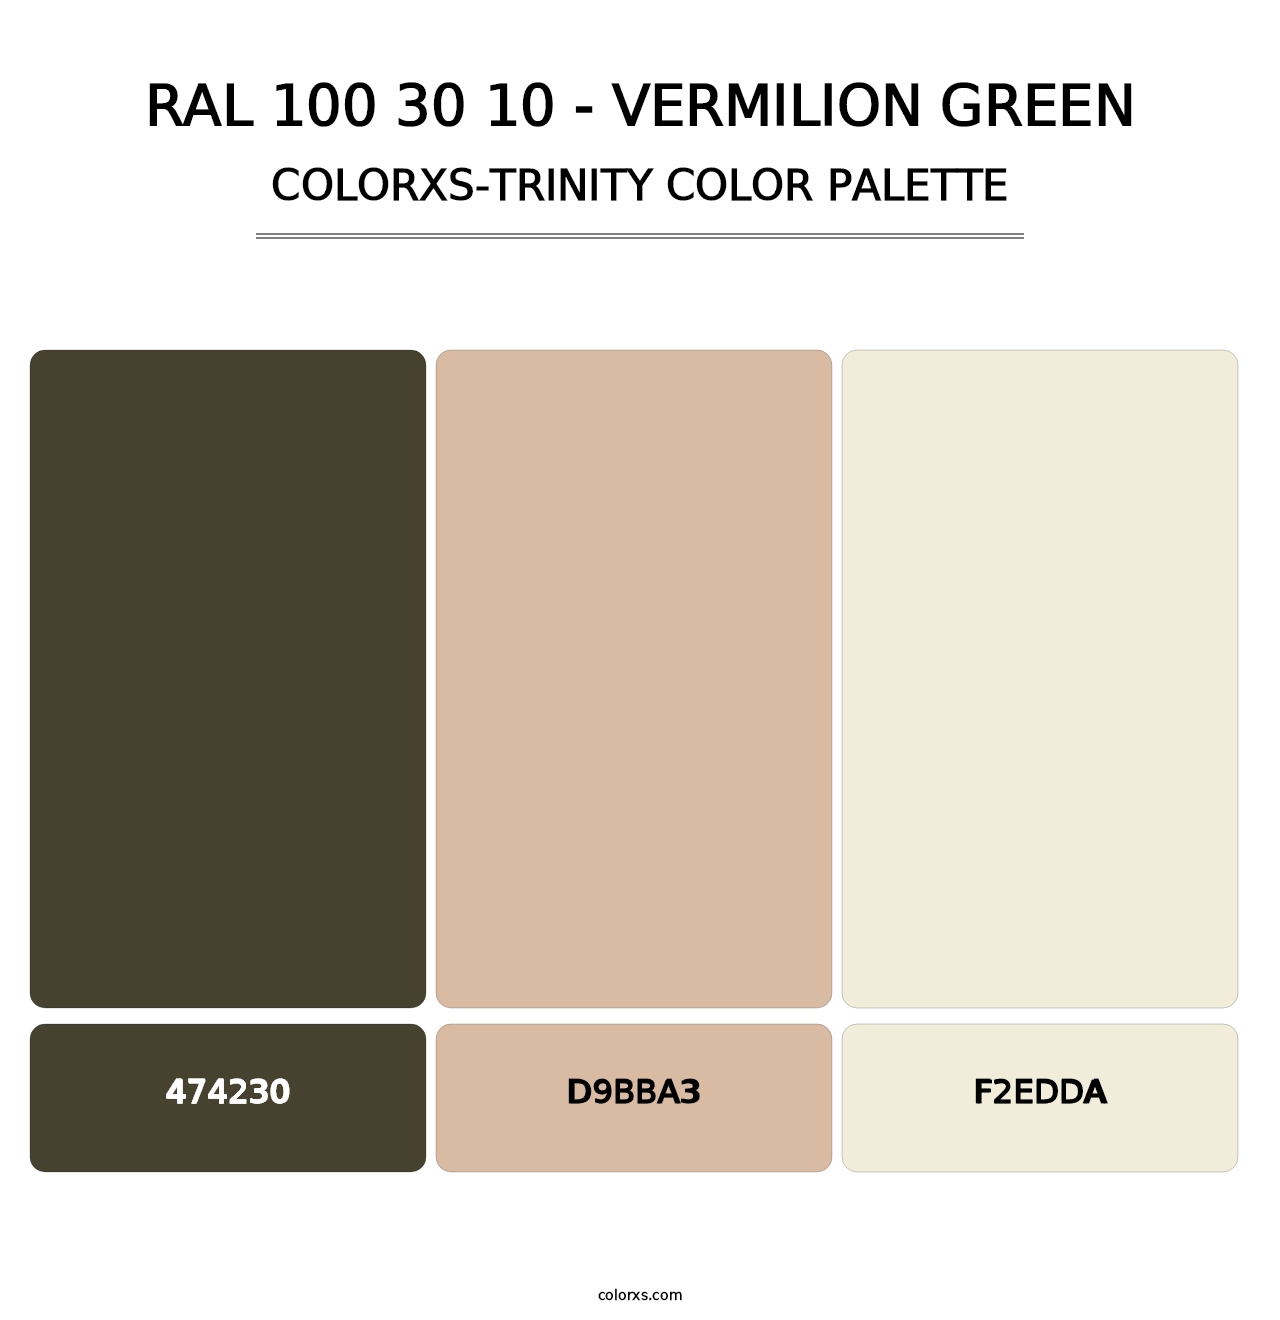 RAL 100 30 10 - Vermilion Green - Colorxs Trinity Palette